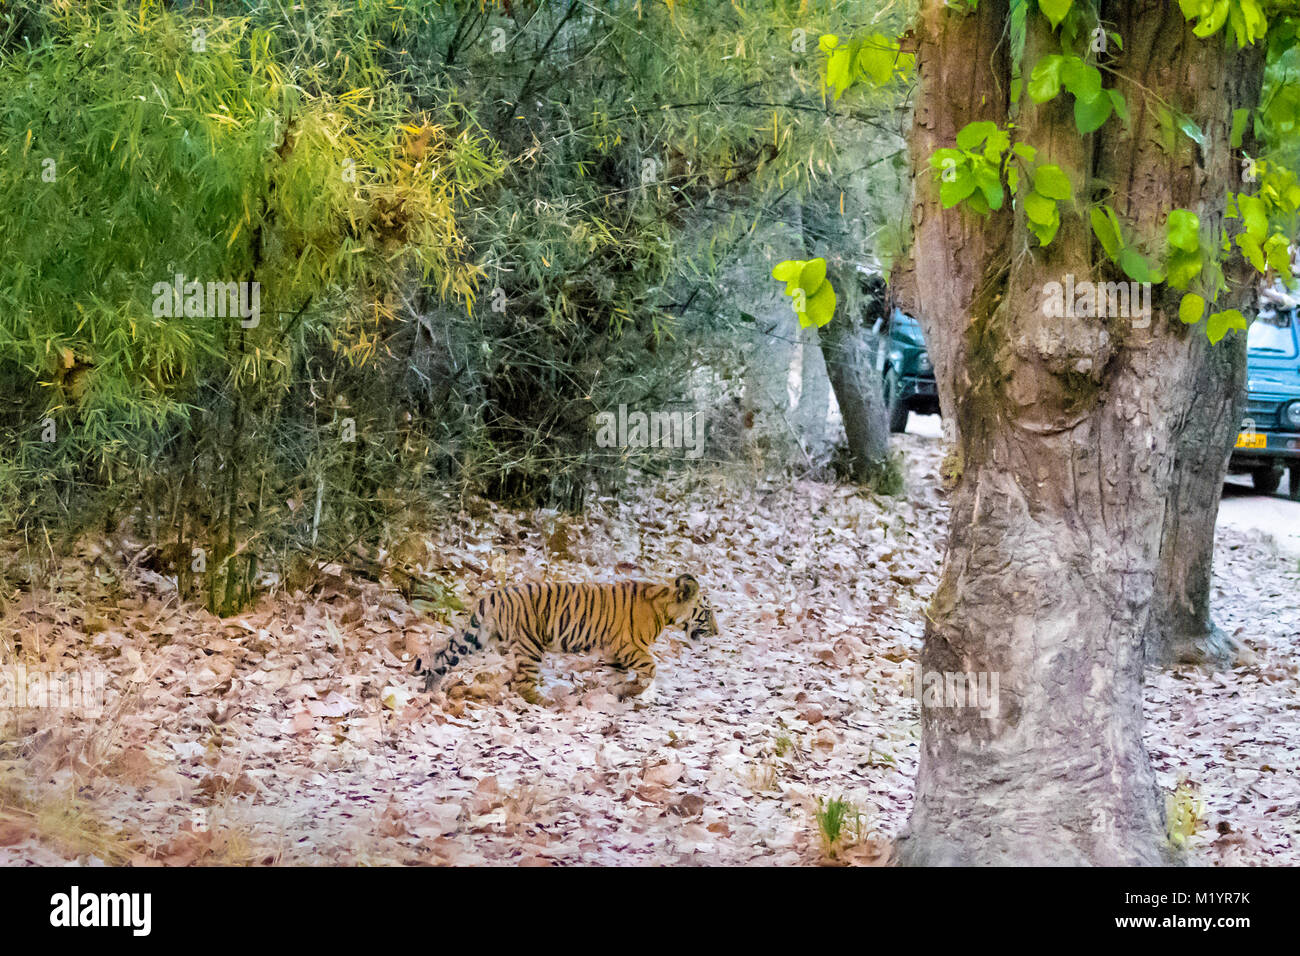 Little two month old wild Bengal Tiger Cub, Panthera tigris tigris, walking towards a road with vehicles, Bandhavgarh Tiger Reserve, India Stock Photo